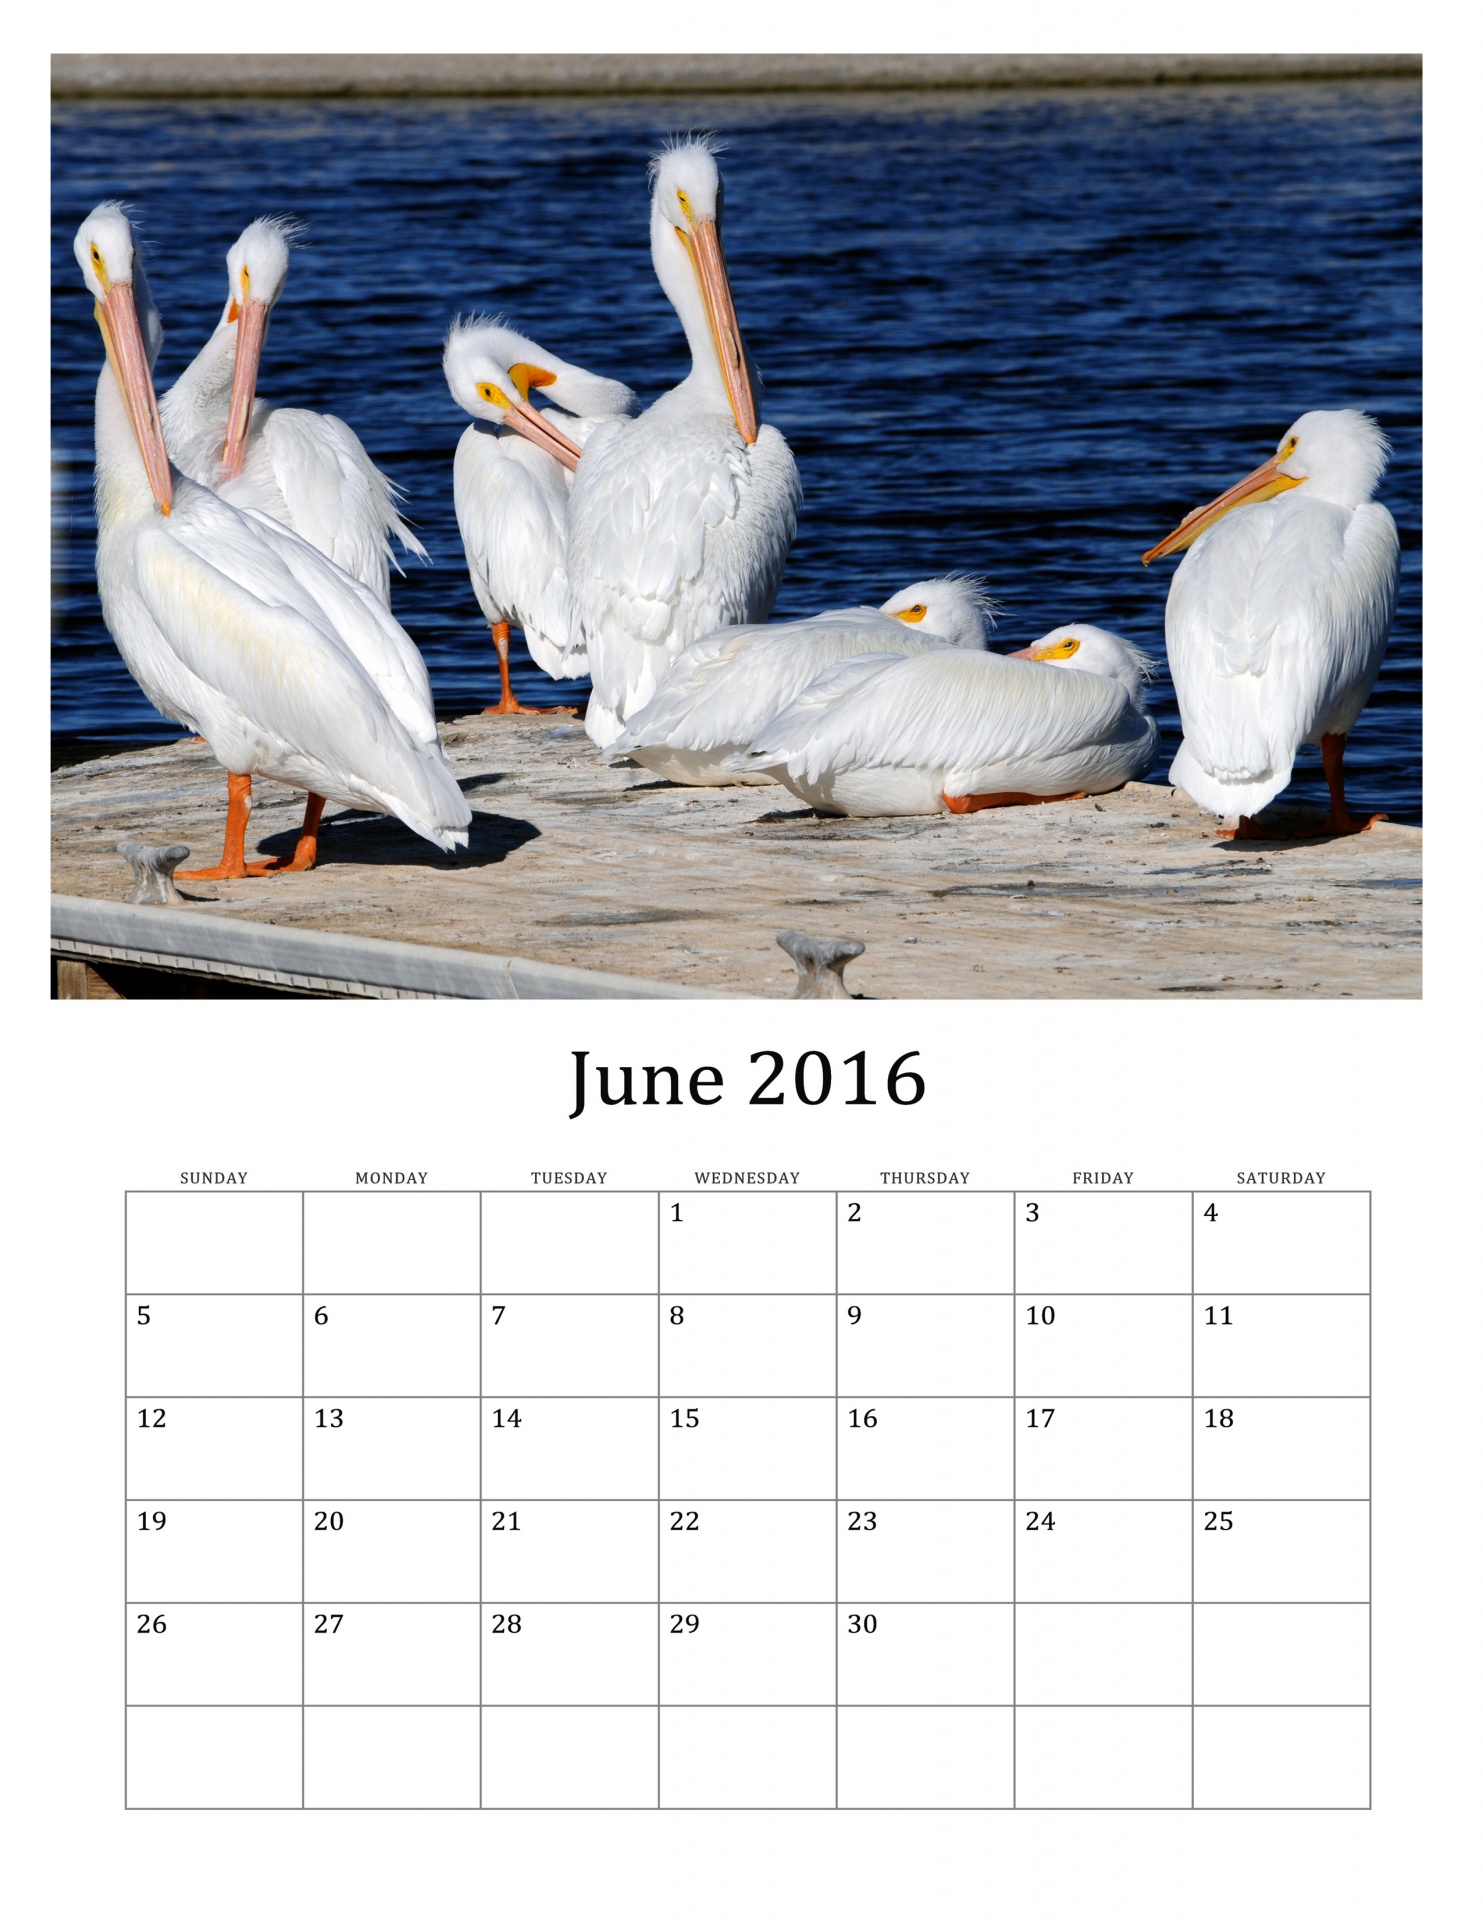 june-2016-calendar-of-wild-birds-free-stock-photo-public-domain-pictures